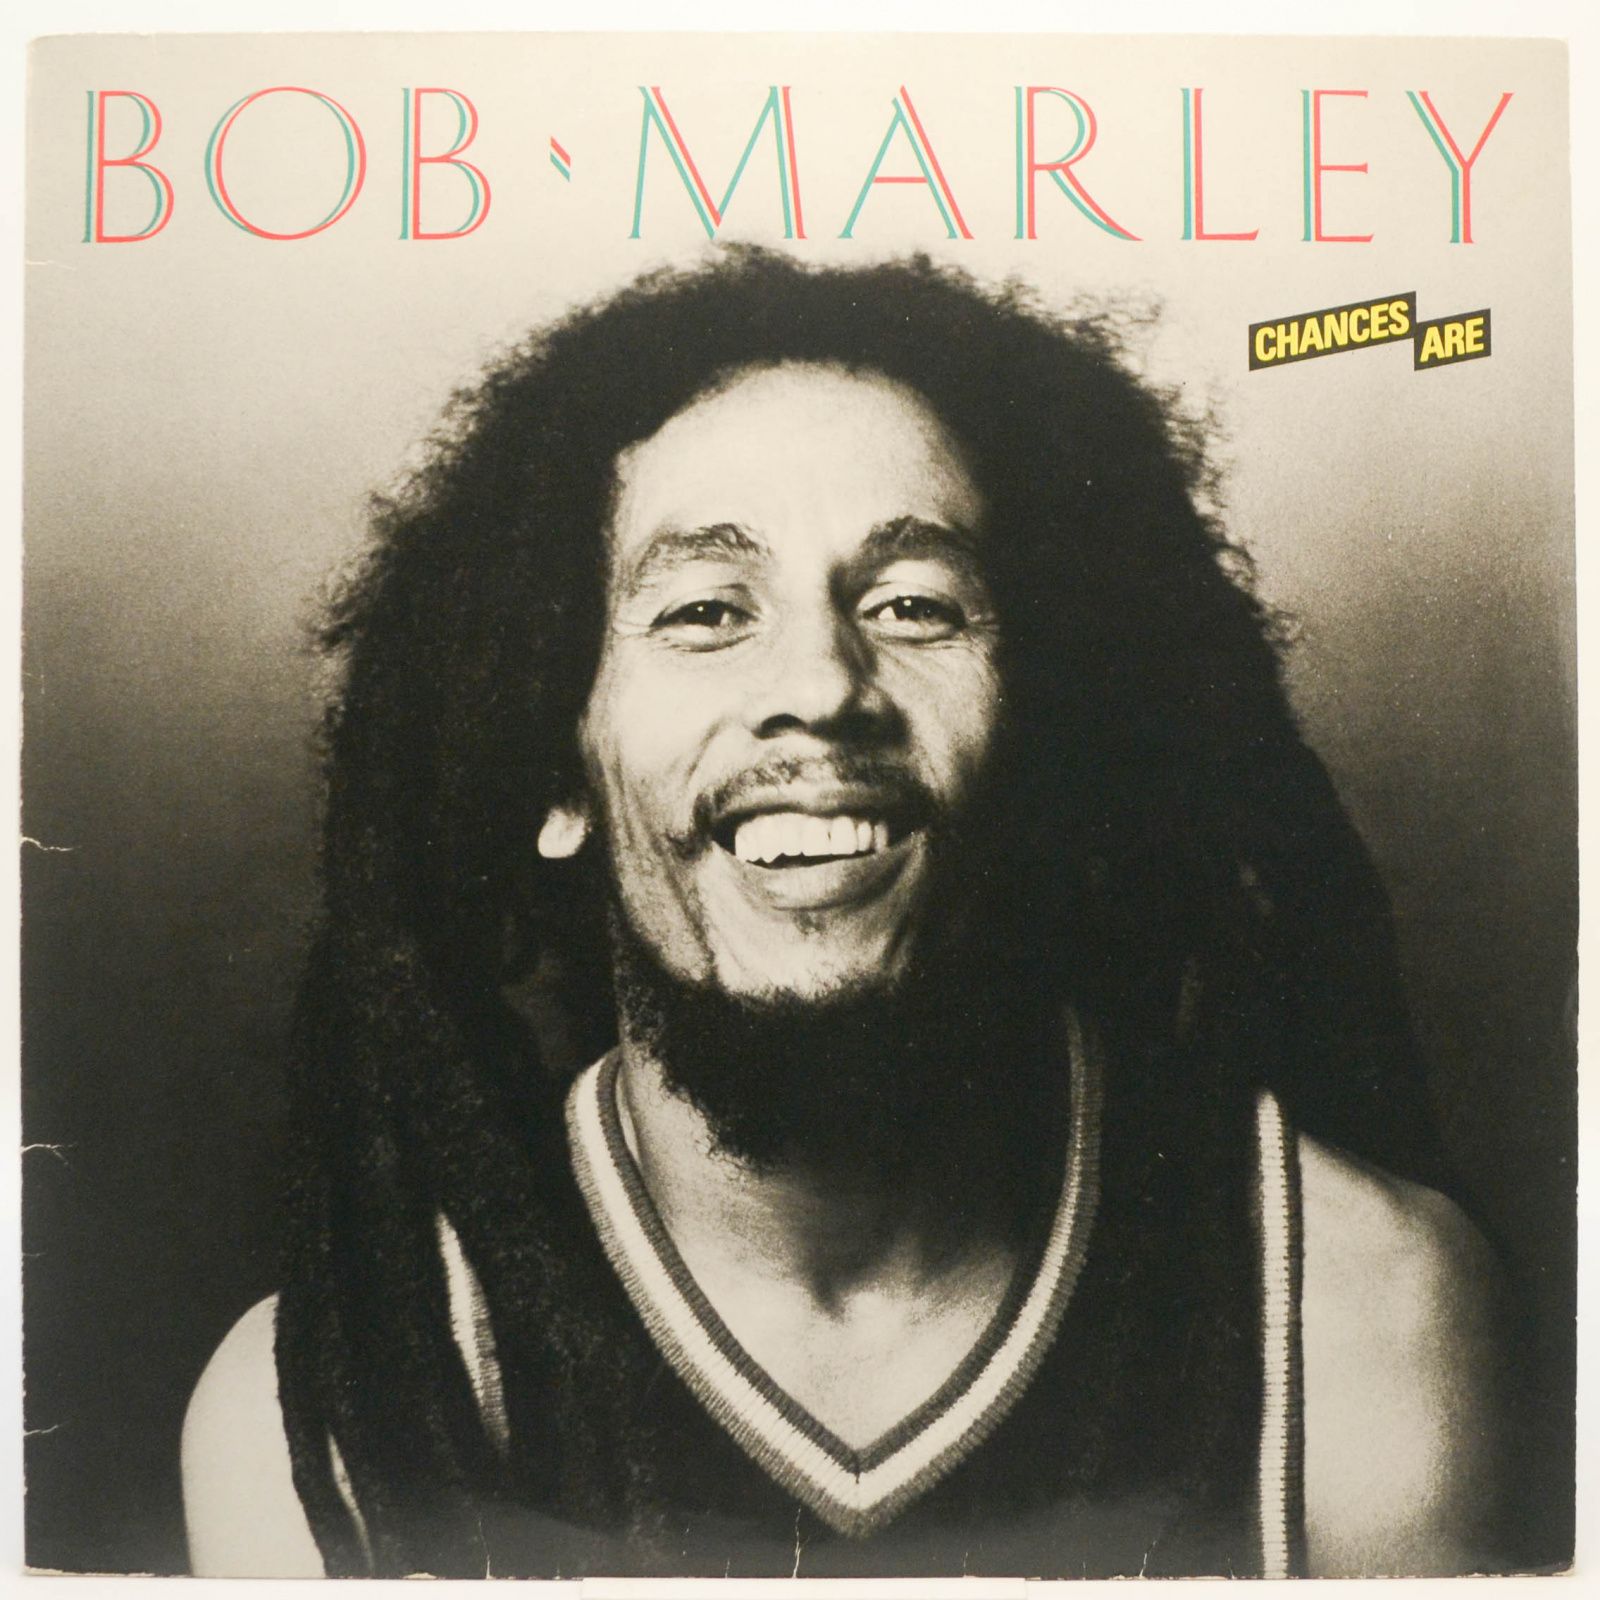 Bob Marley — Chances Are, 1981